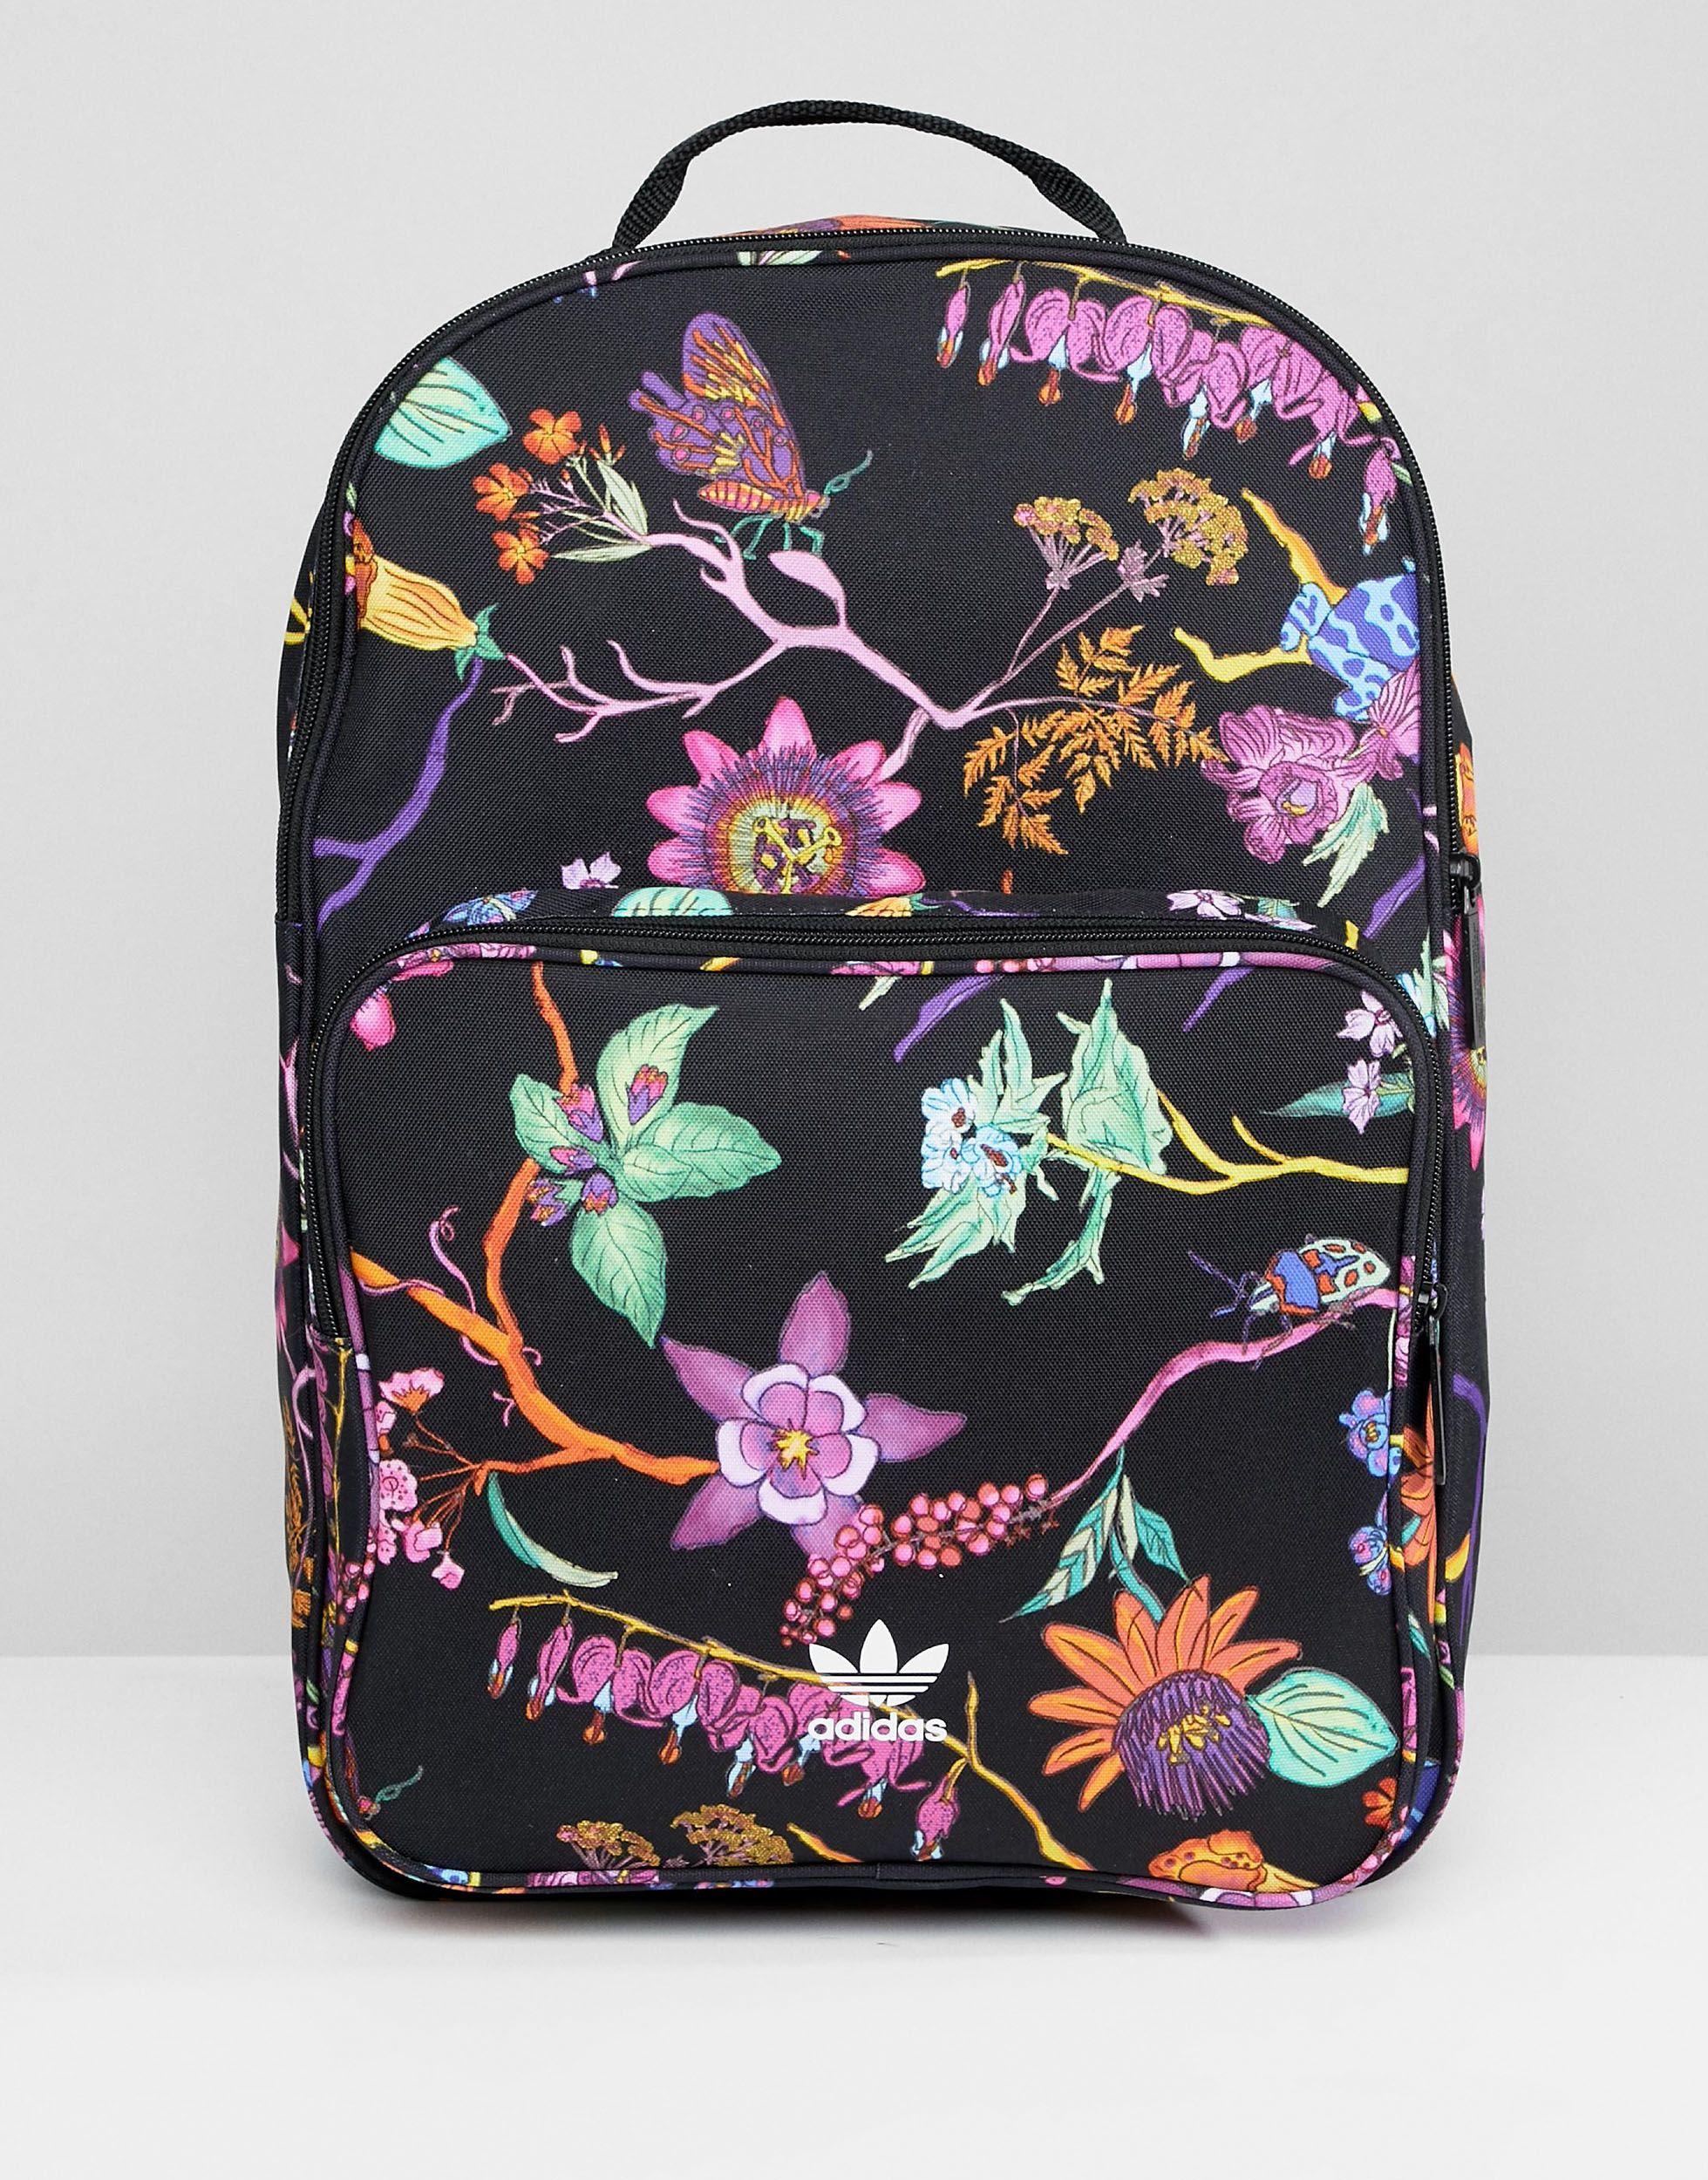 adidas Originals Floral Print Backpack in Black - Lyst